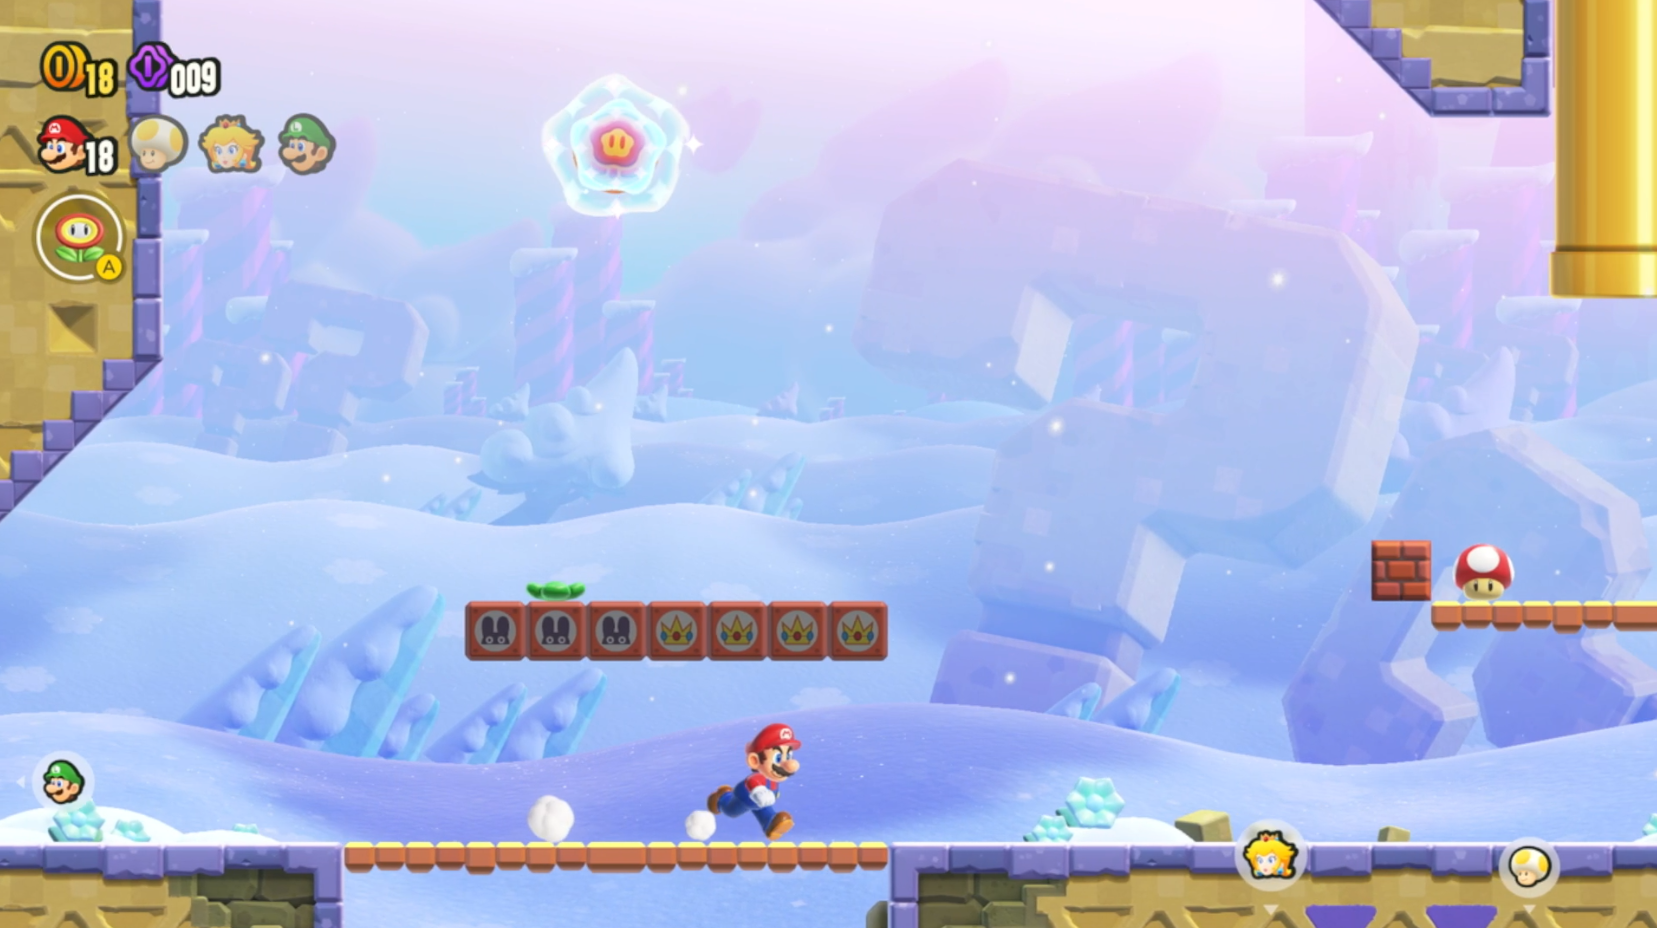 Mario runs across a level in Super Mario Wonder.